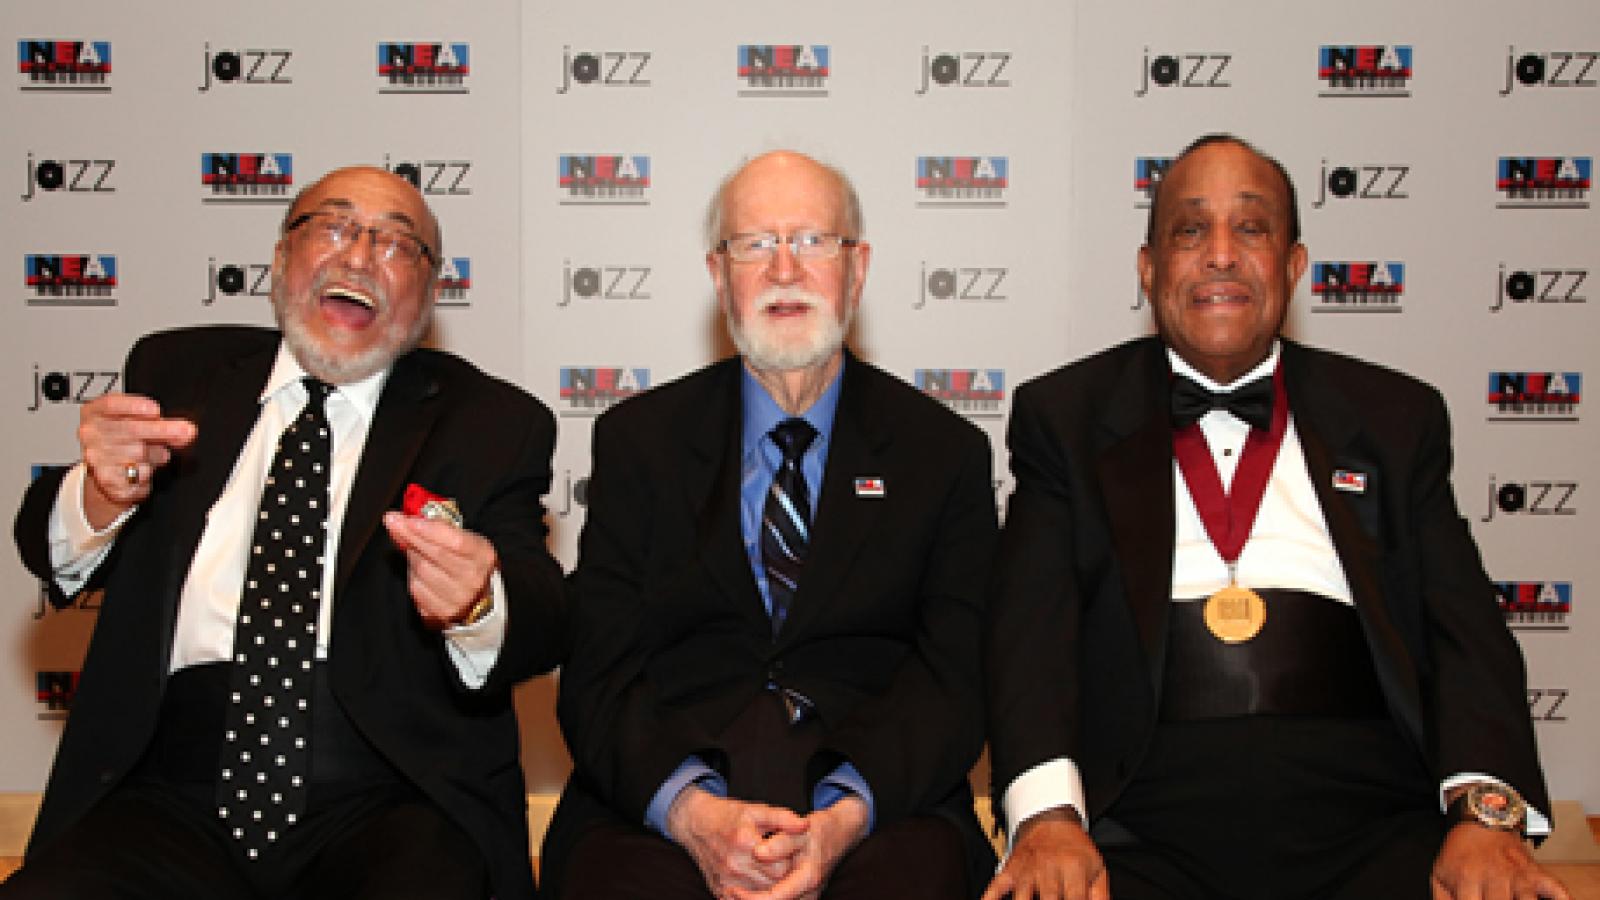 2013 NEA Jazz Masters Awards Ceremony & Concert,